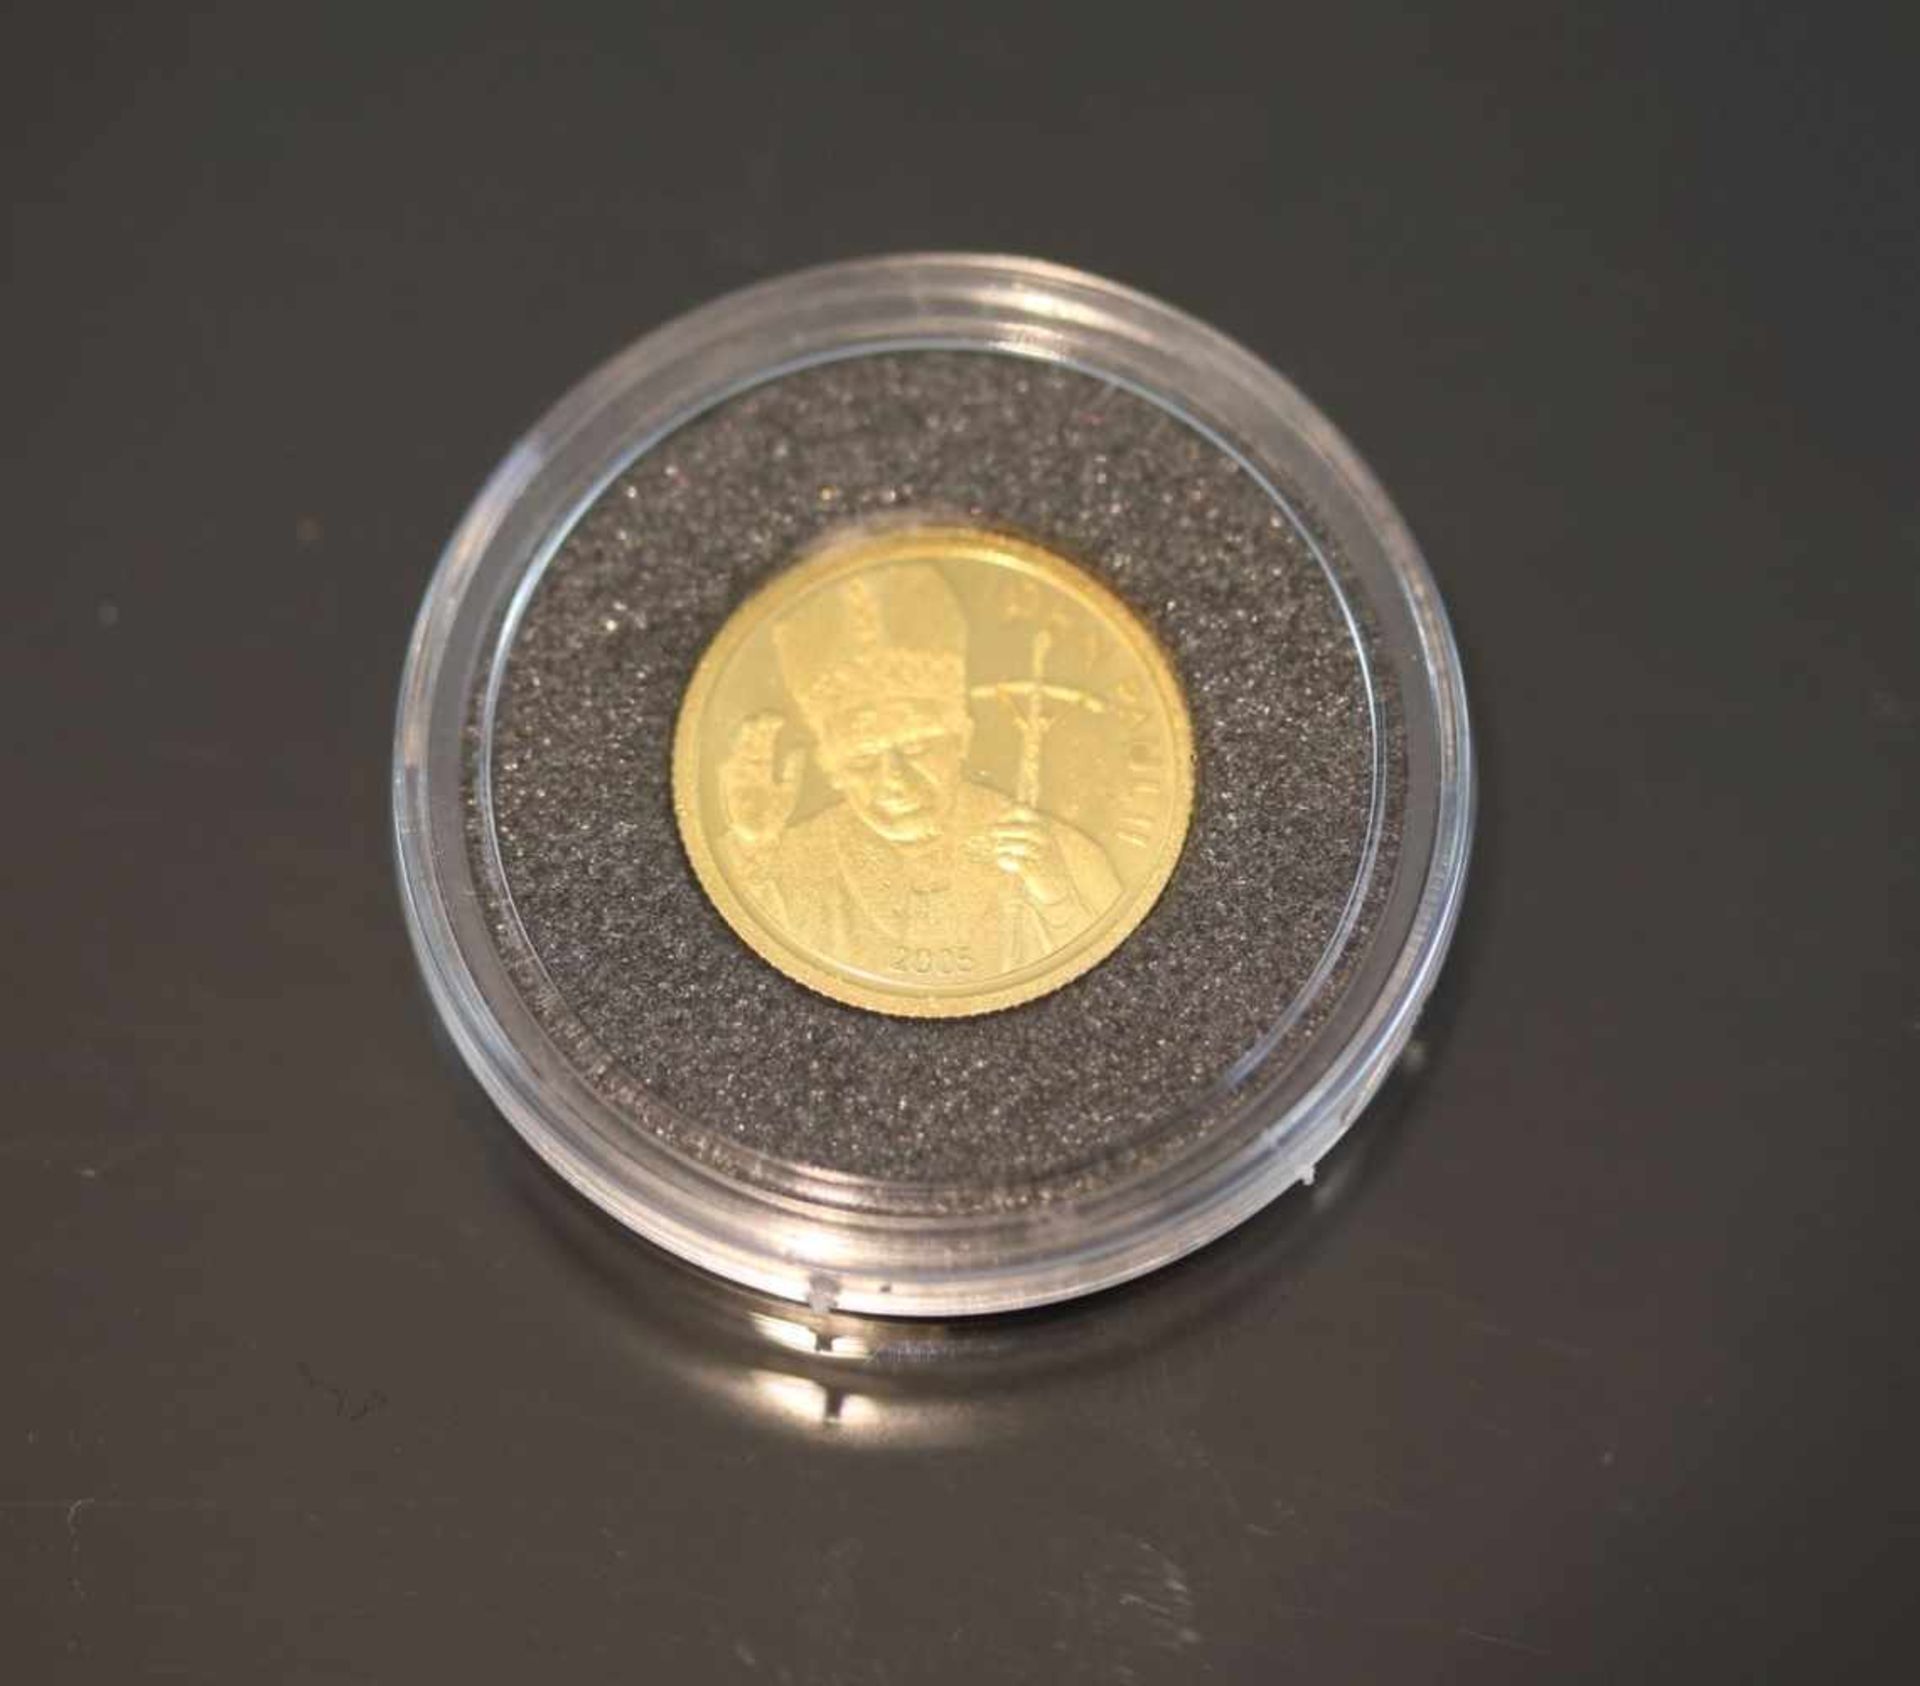 1 GoldmünzeMaterial: 999 GoldGewicht: 1,3 Gramm Republic of Liberia, 10 Dollar.- - -25.00 % buyer'